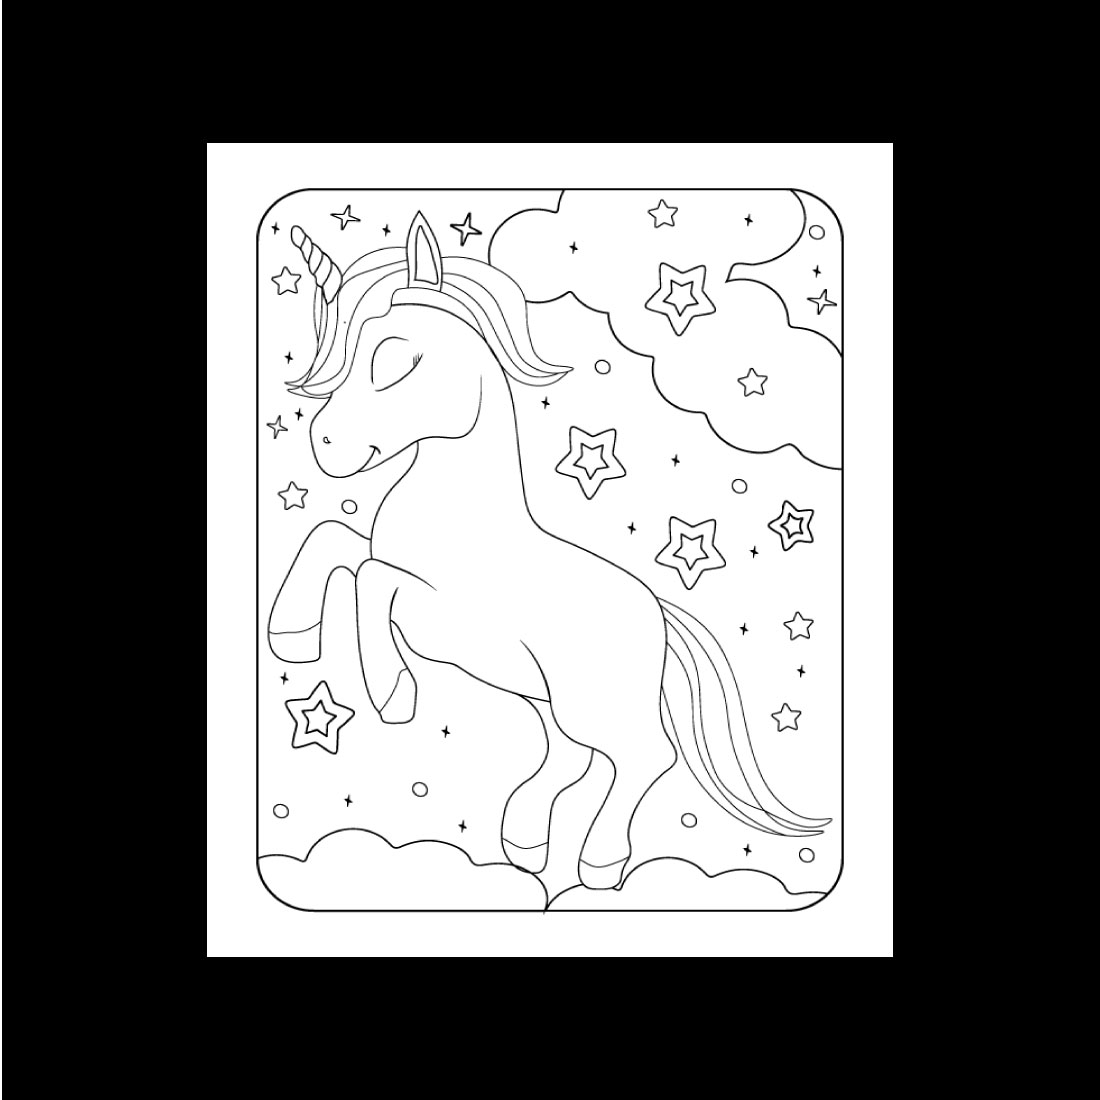 Coloring Unicorn Page Design cover image.